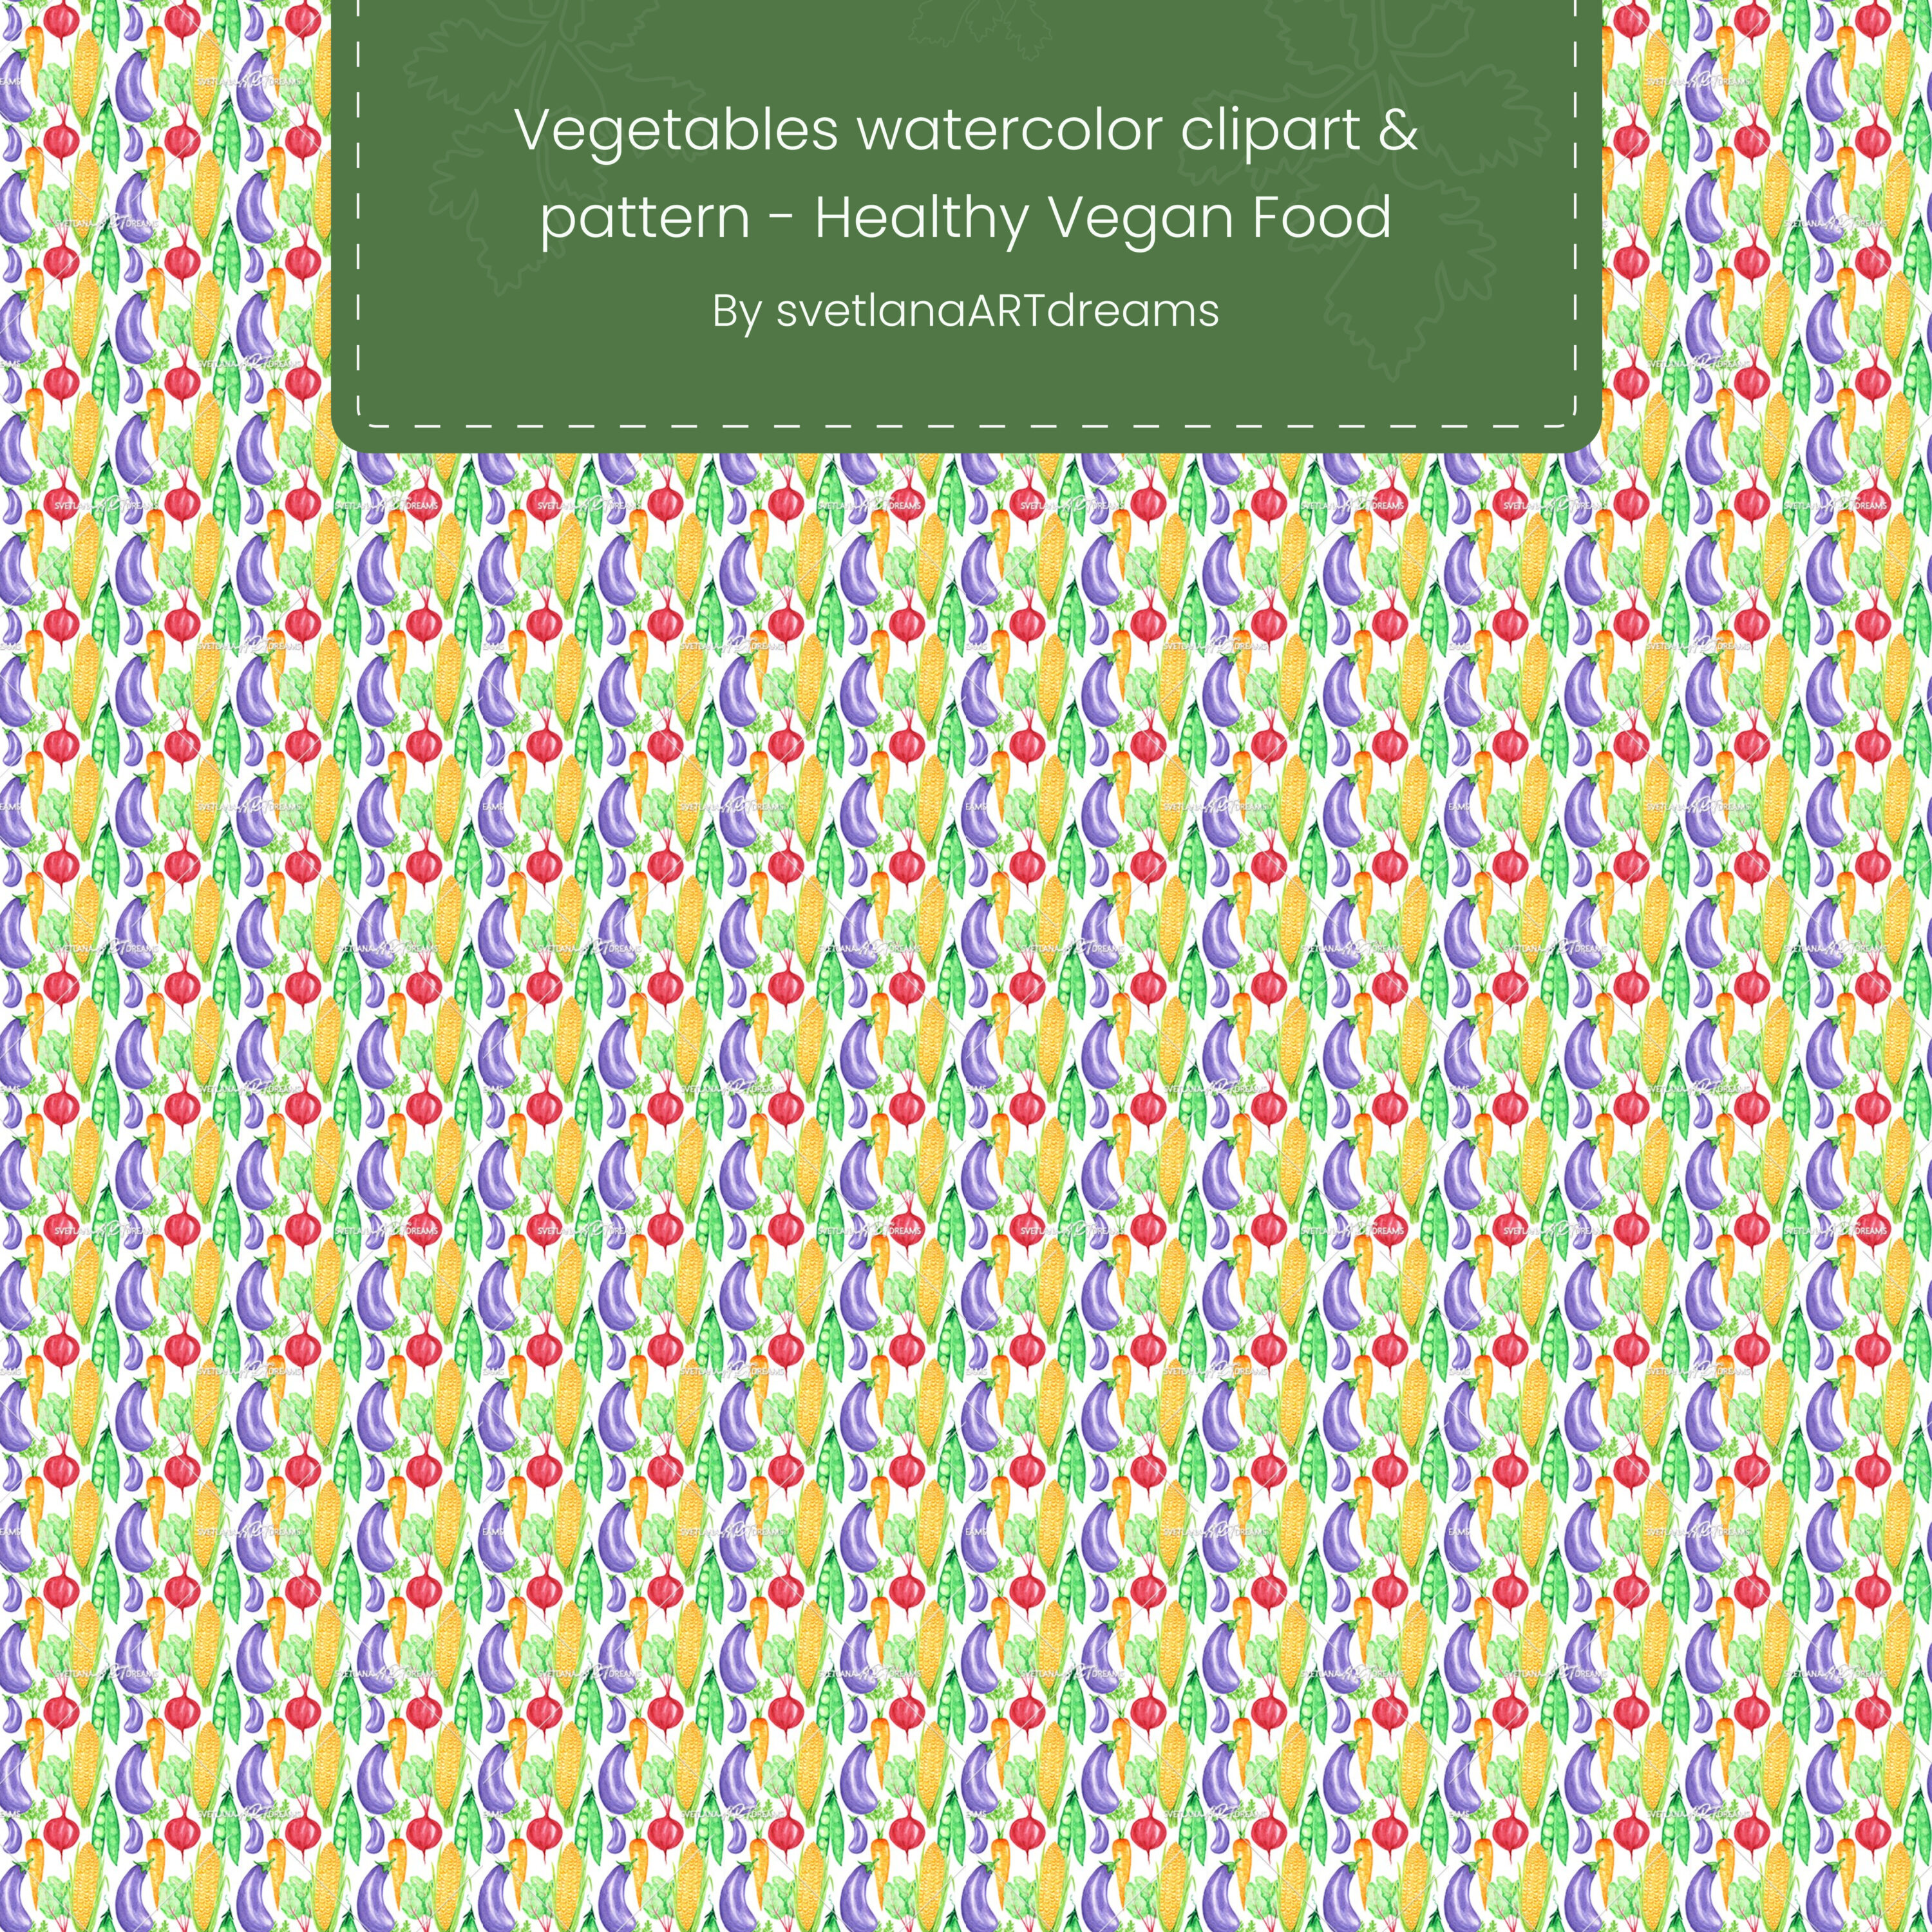 Prints of vegetables watercolor clipart pattern healthy vegan food.